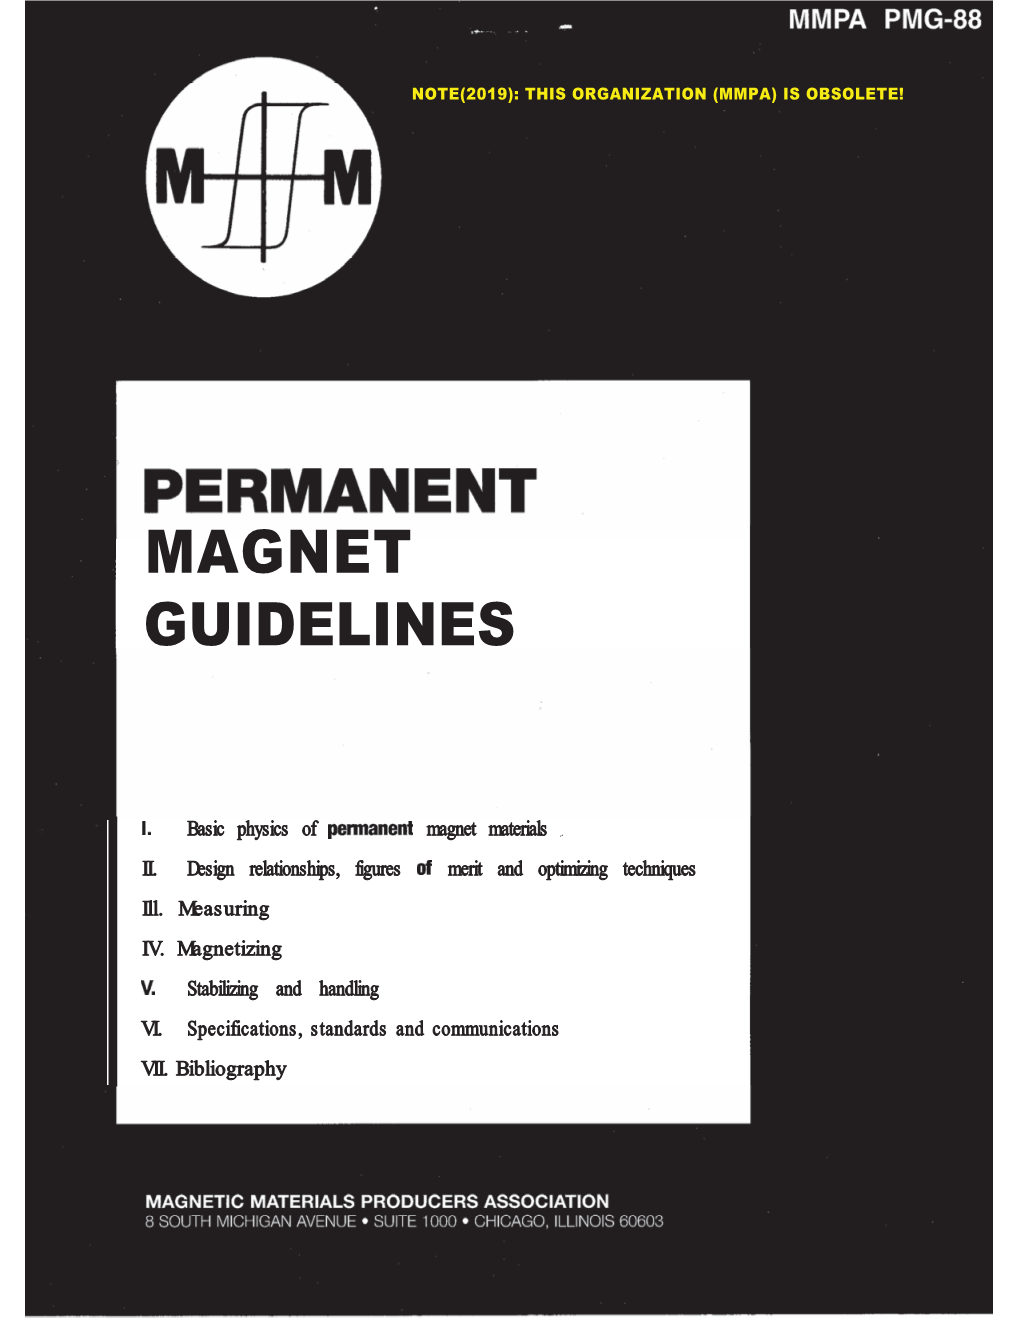 Permanent Magnet Design Guidelines